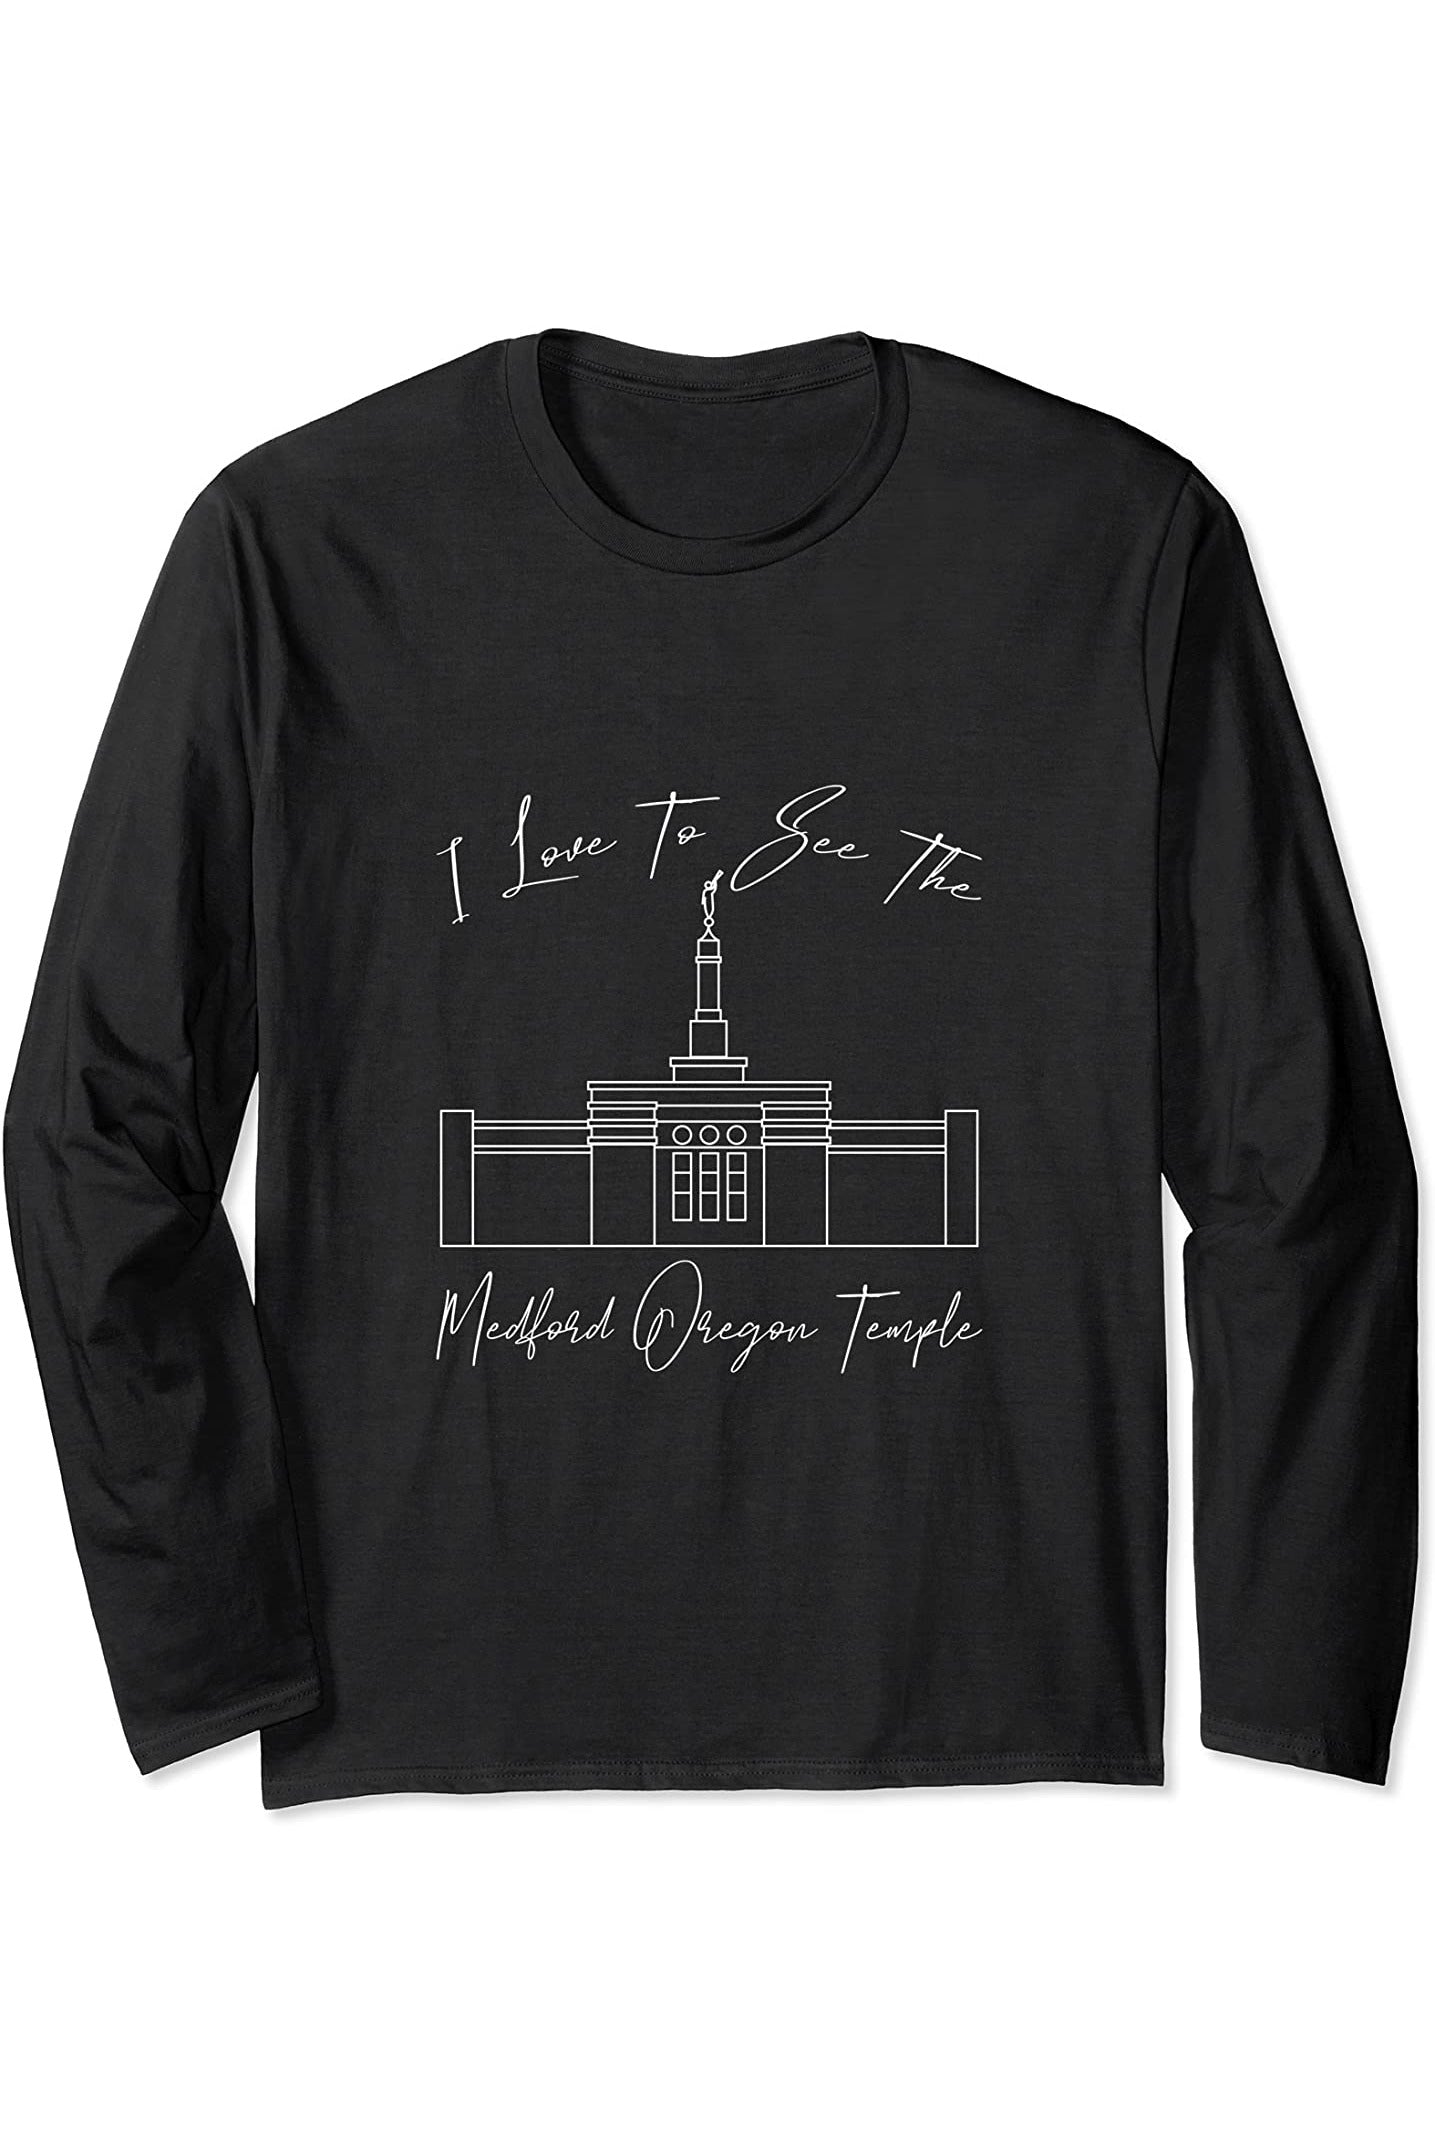 Medford Oregon Temple Long Sleeve T-Shirt - Calligraphy Style (English) US